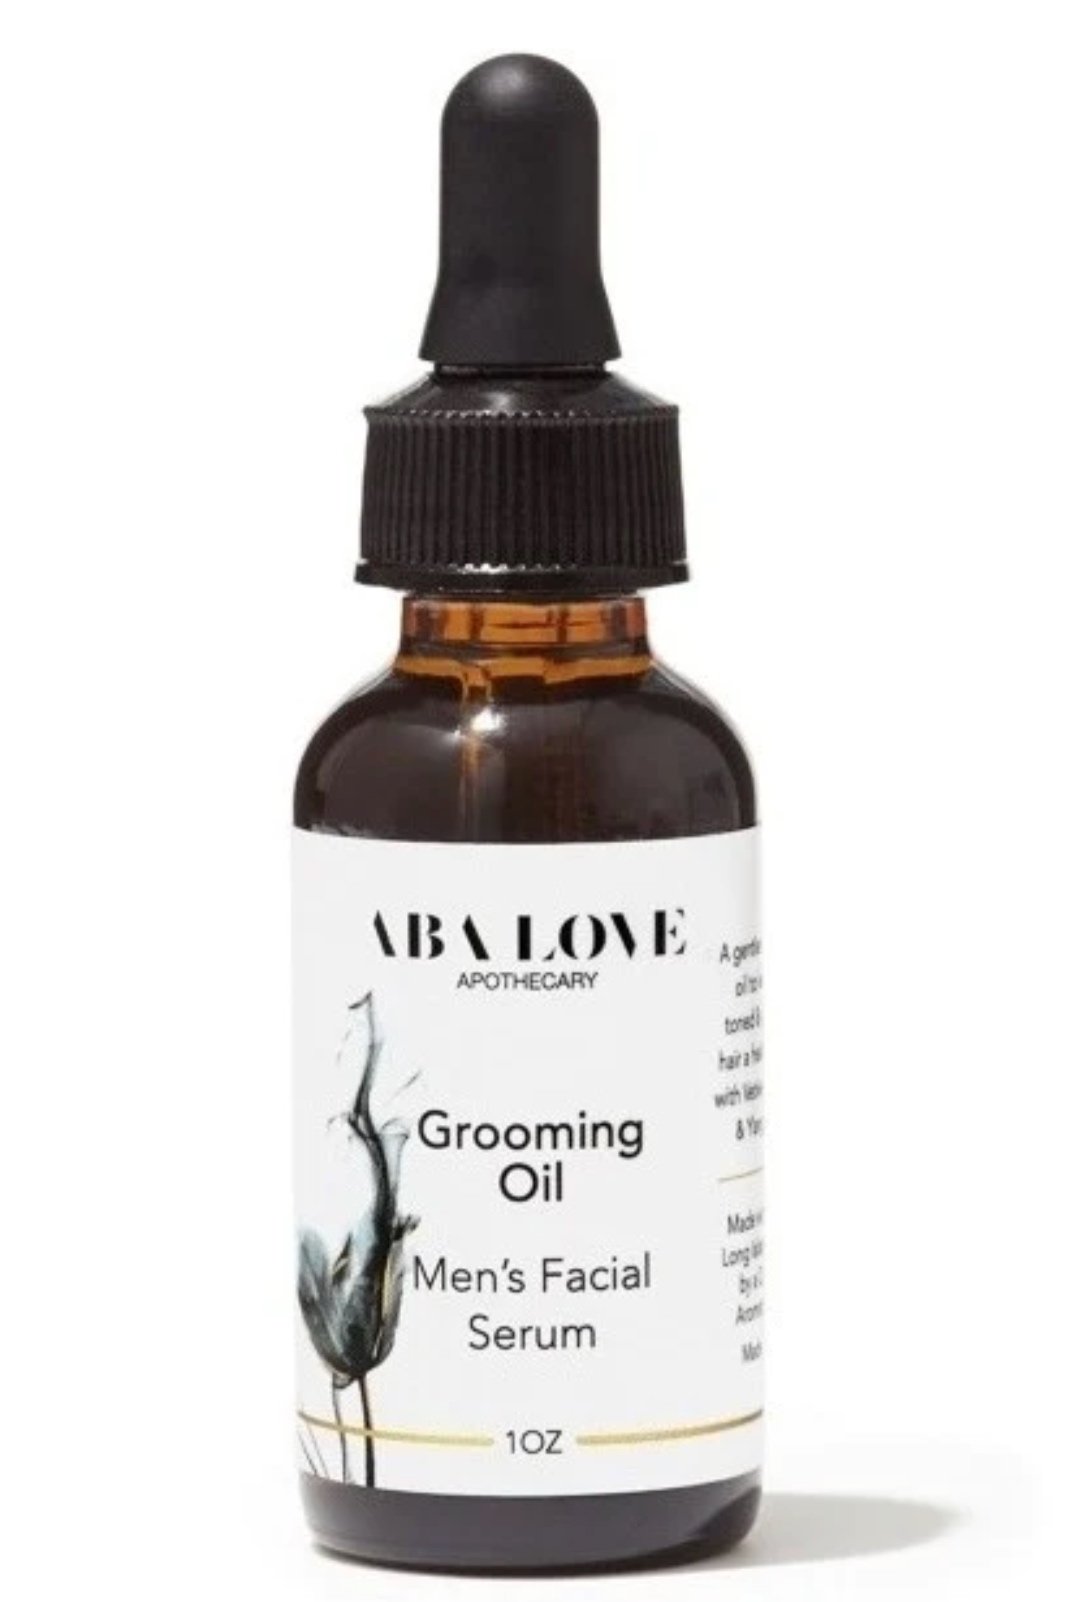 For Vegans/Organic Ingredients: Aba Love Grooming Oil/Men’s Facial Serum